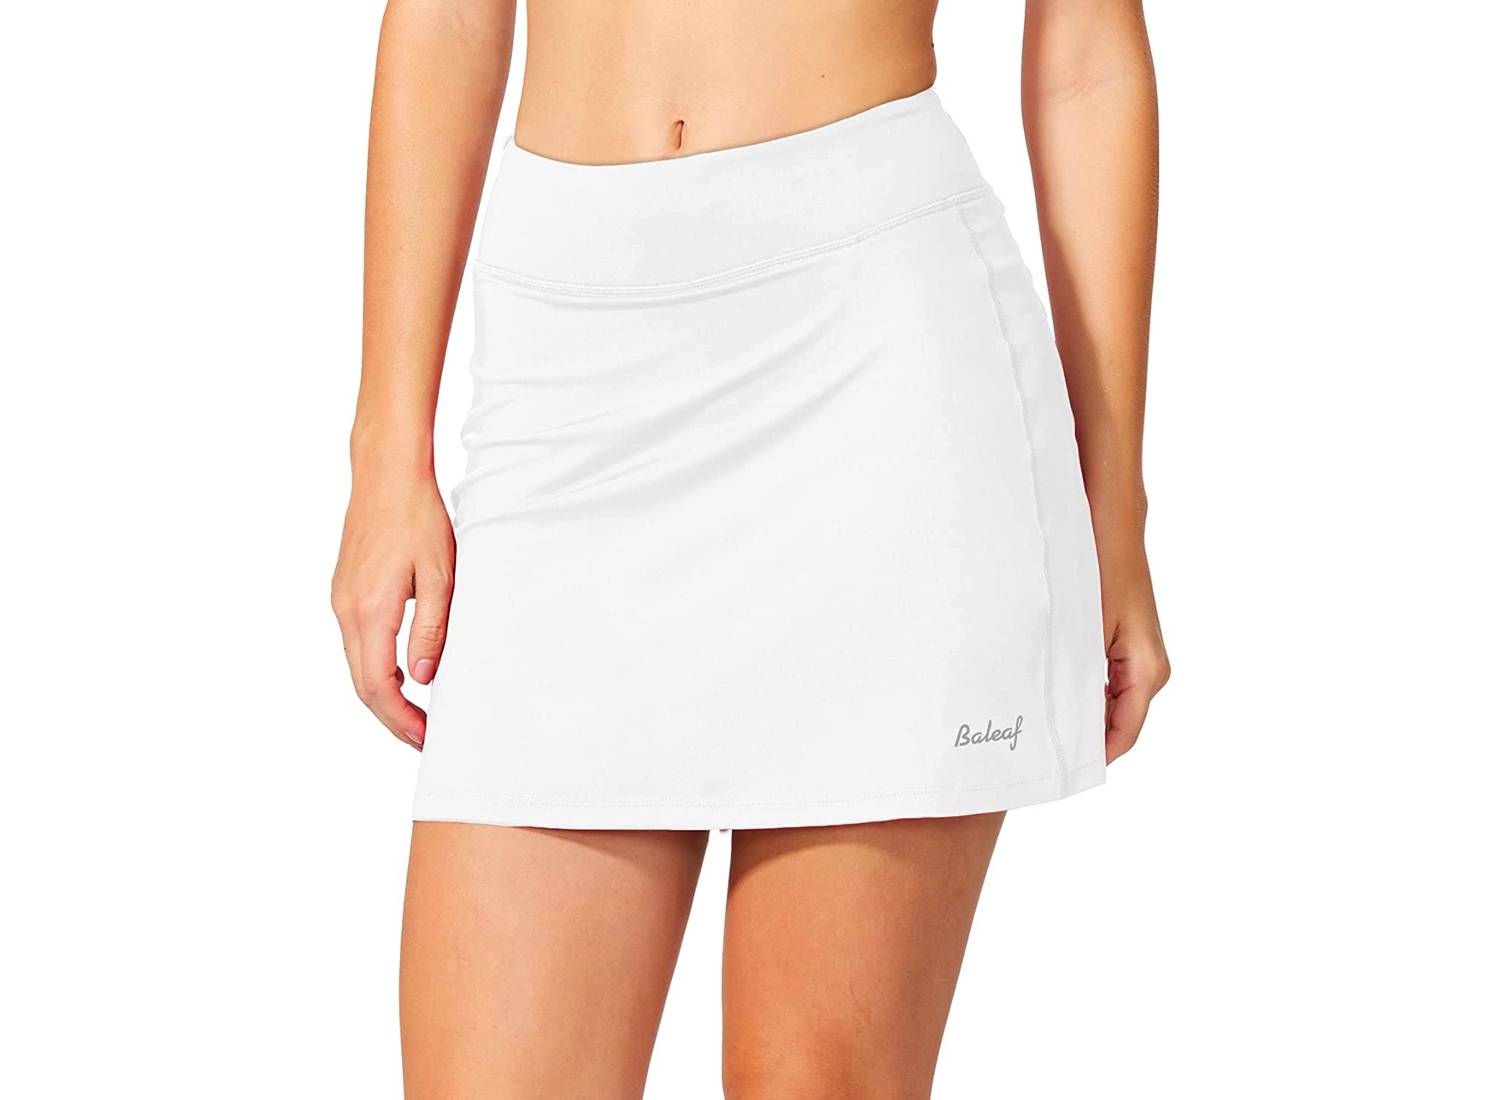 सफेद टेनिस स्कर्ट पहने एक महिला